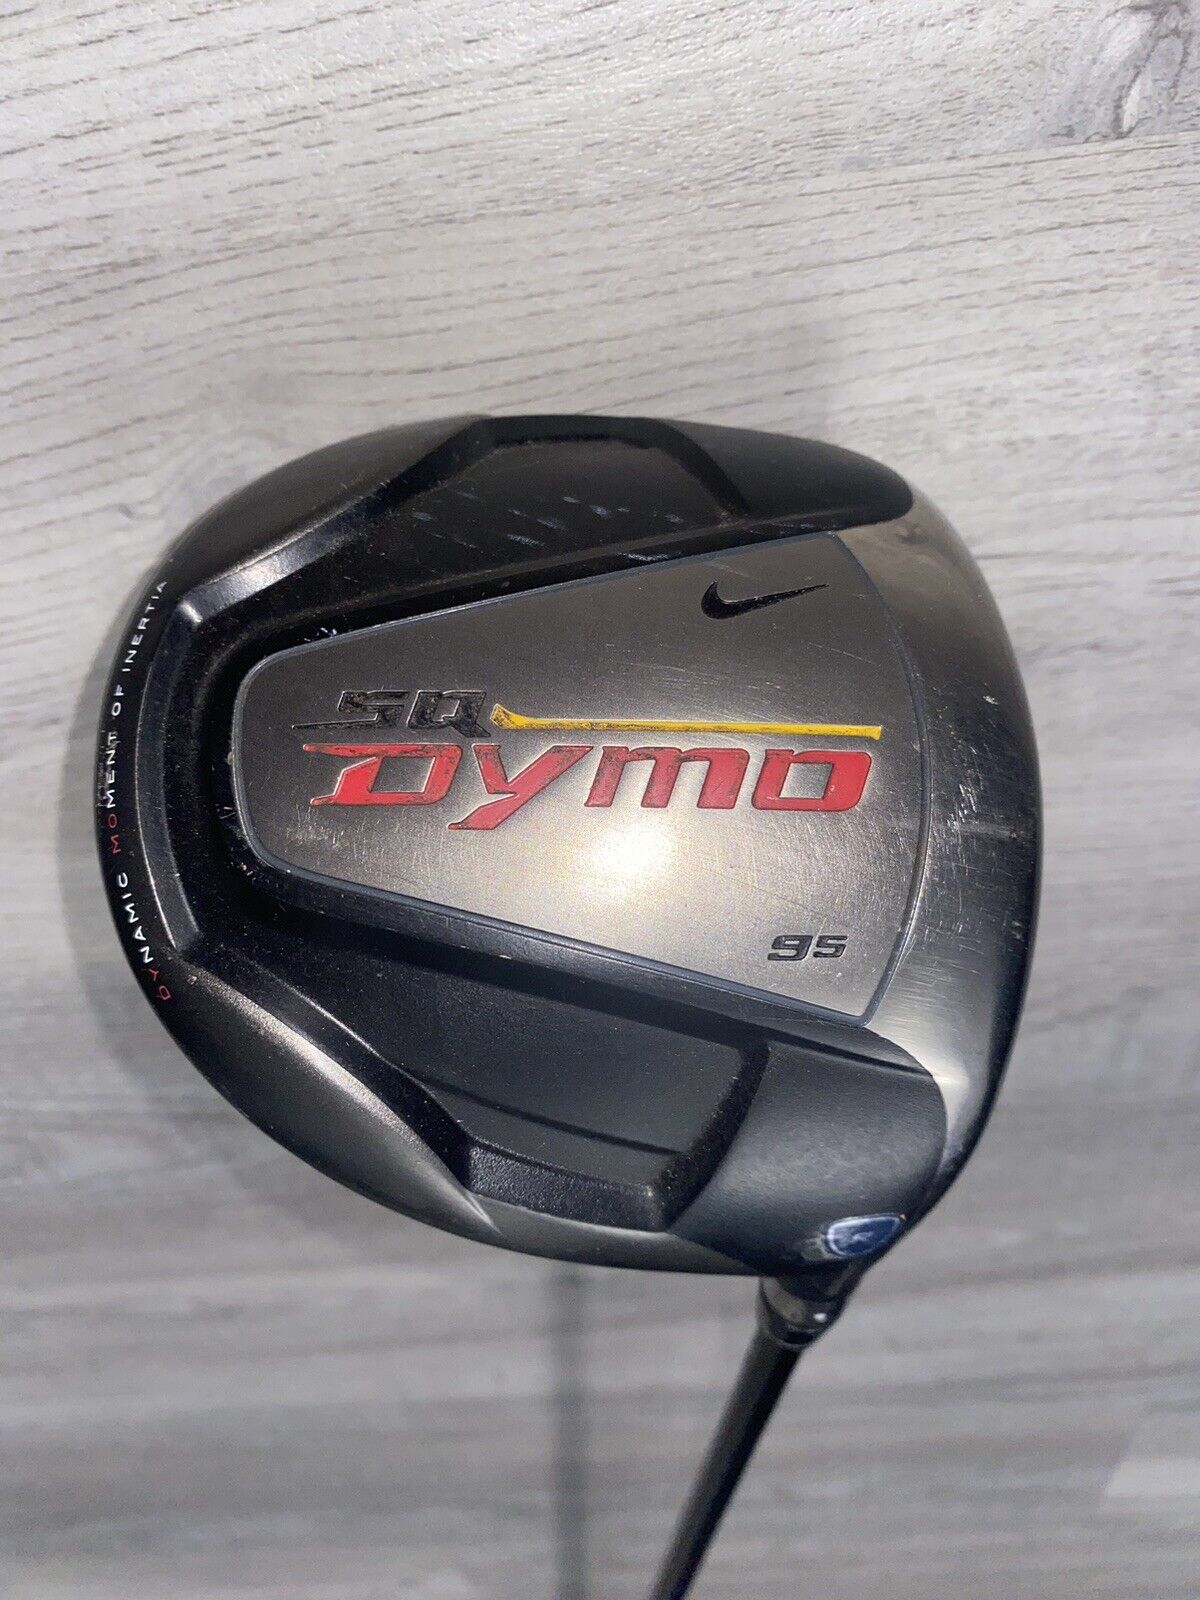 Nike SQ Dymo Driver 9.5° Regular Right-Handed Graphite Golf Club